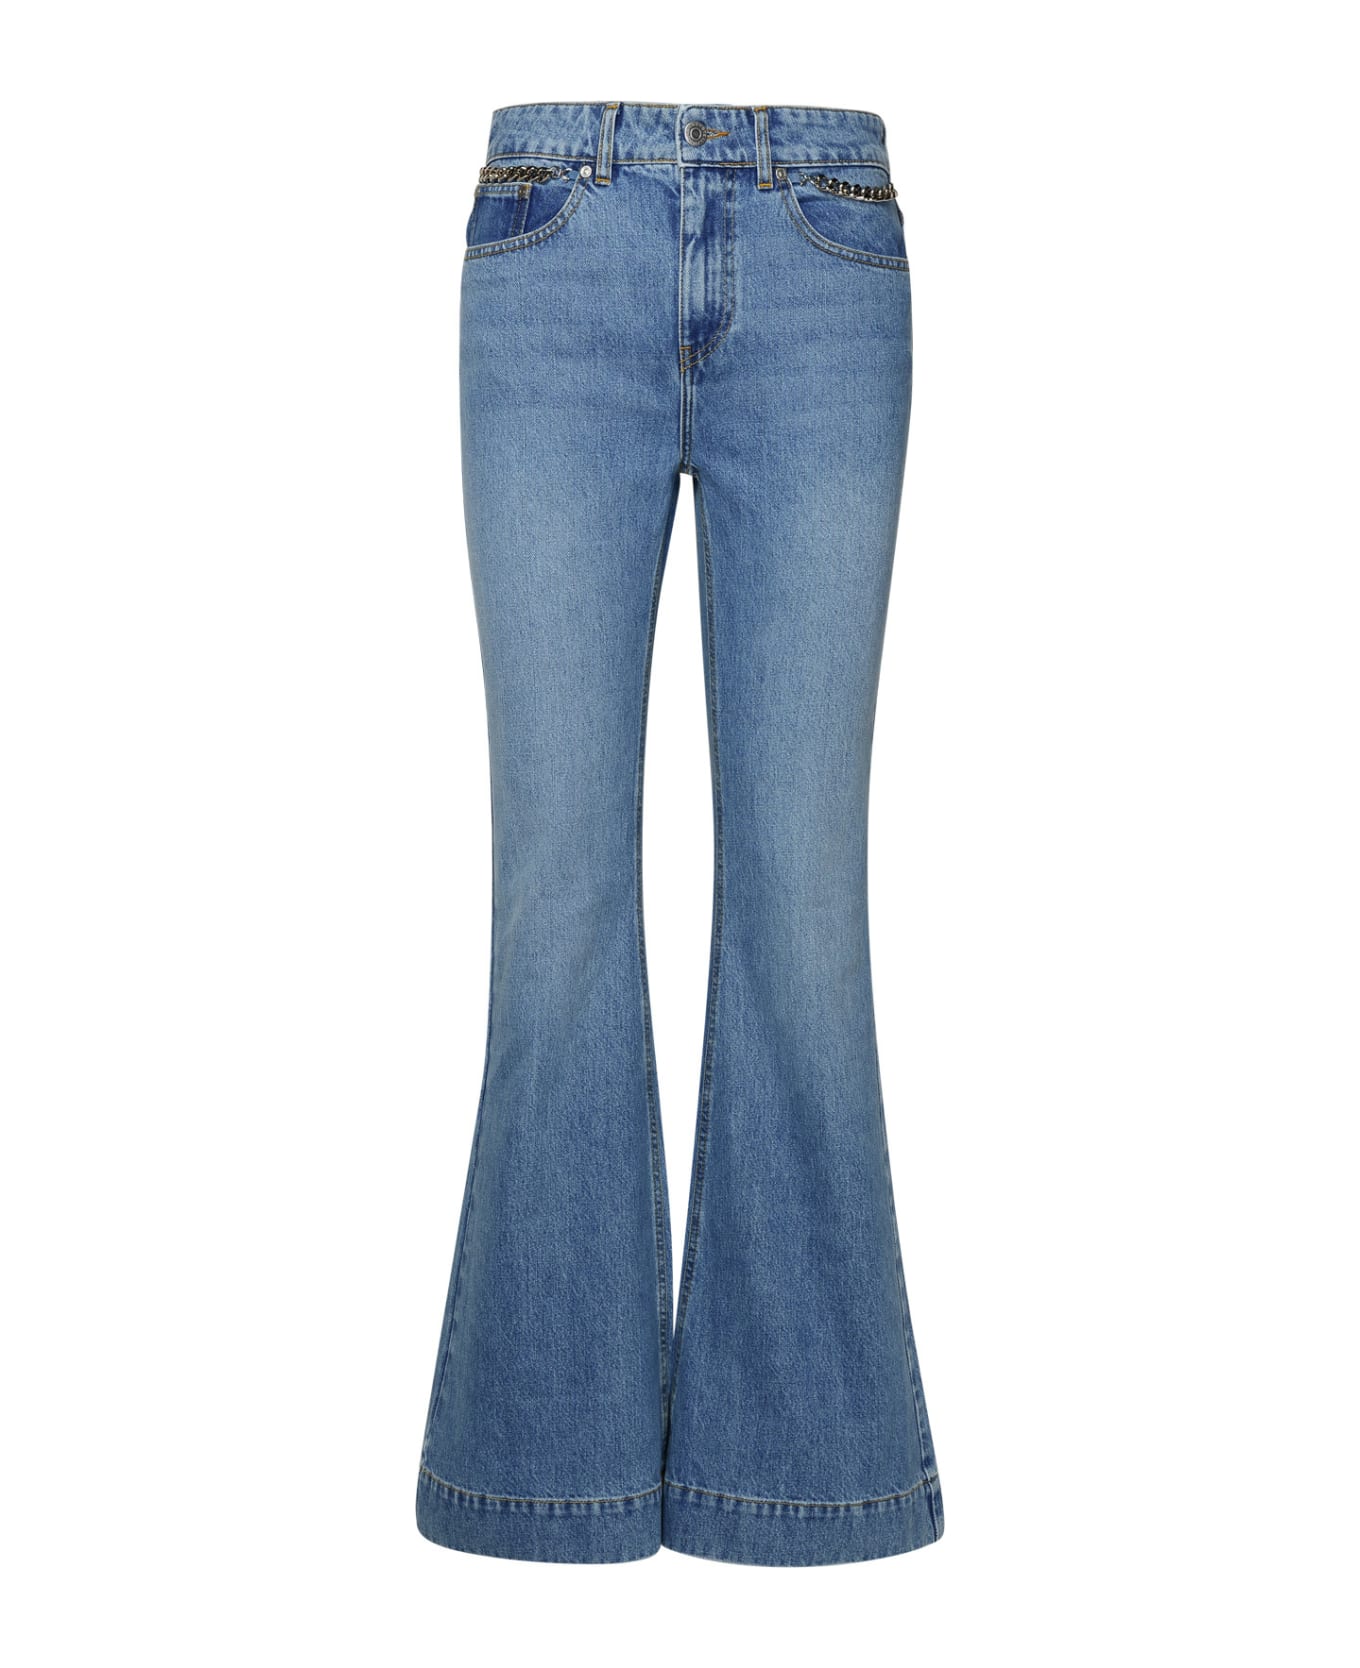 Stella McCartney Falabella Chain Flared Jeans - VINTAGE BLUE デニム